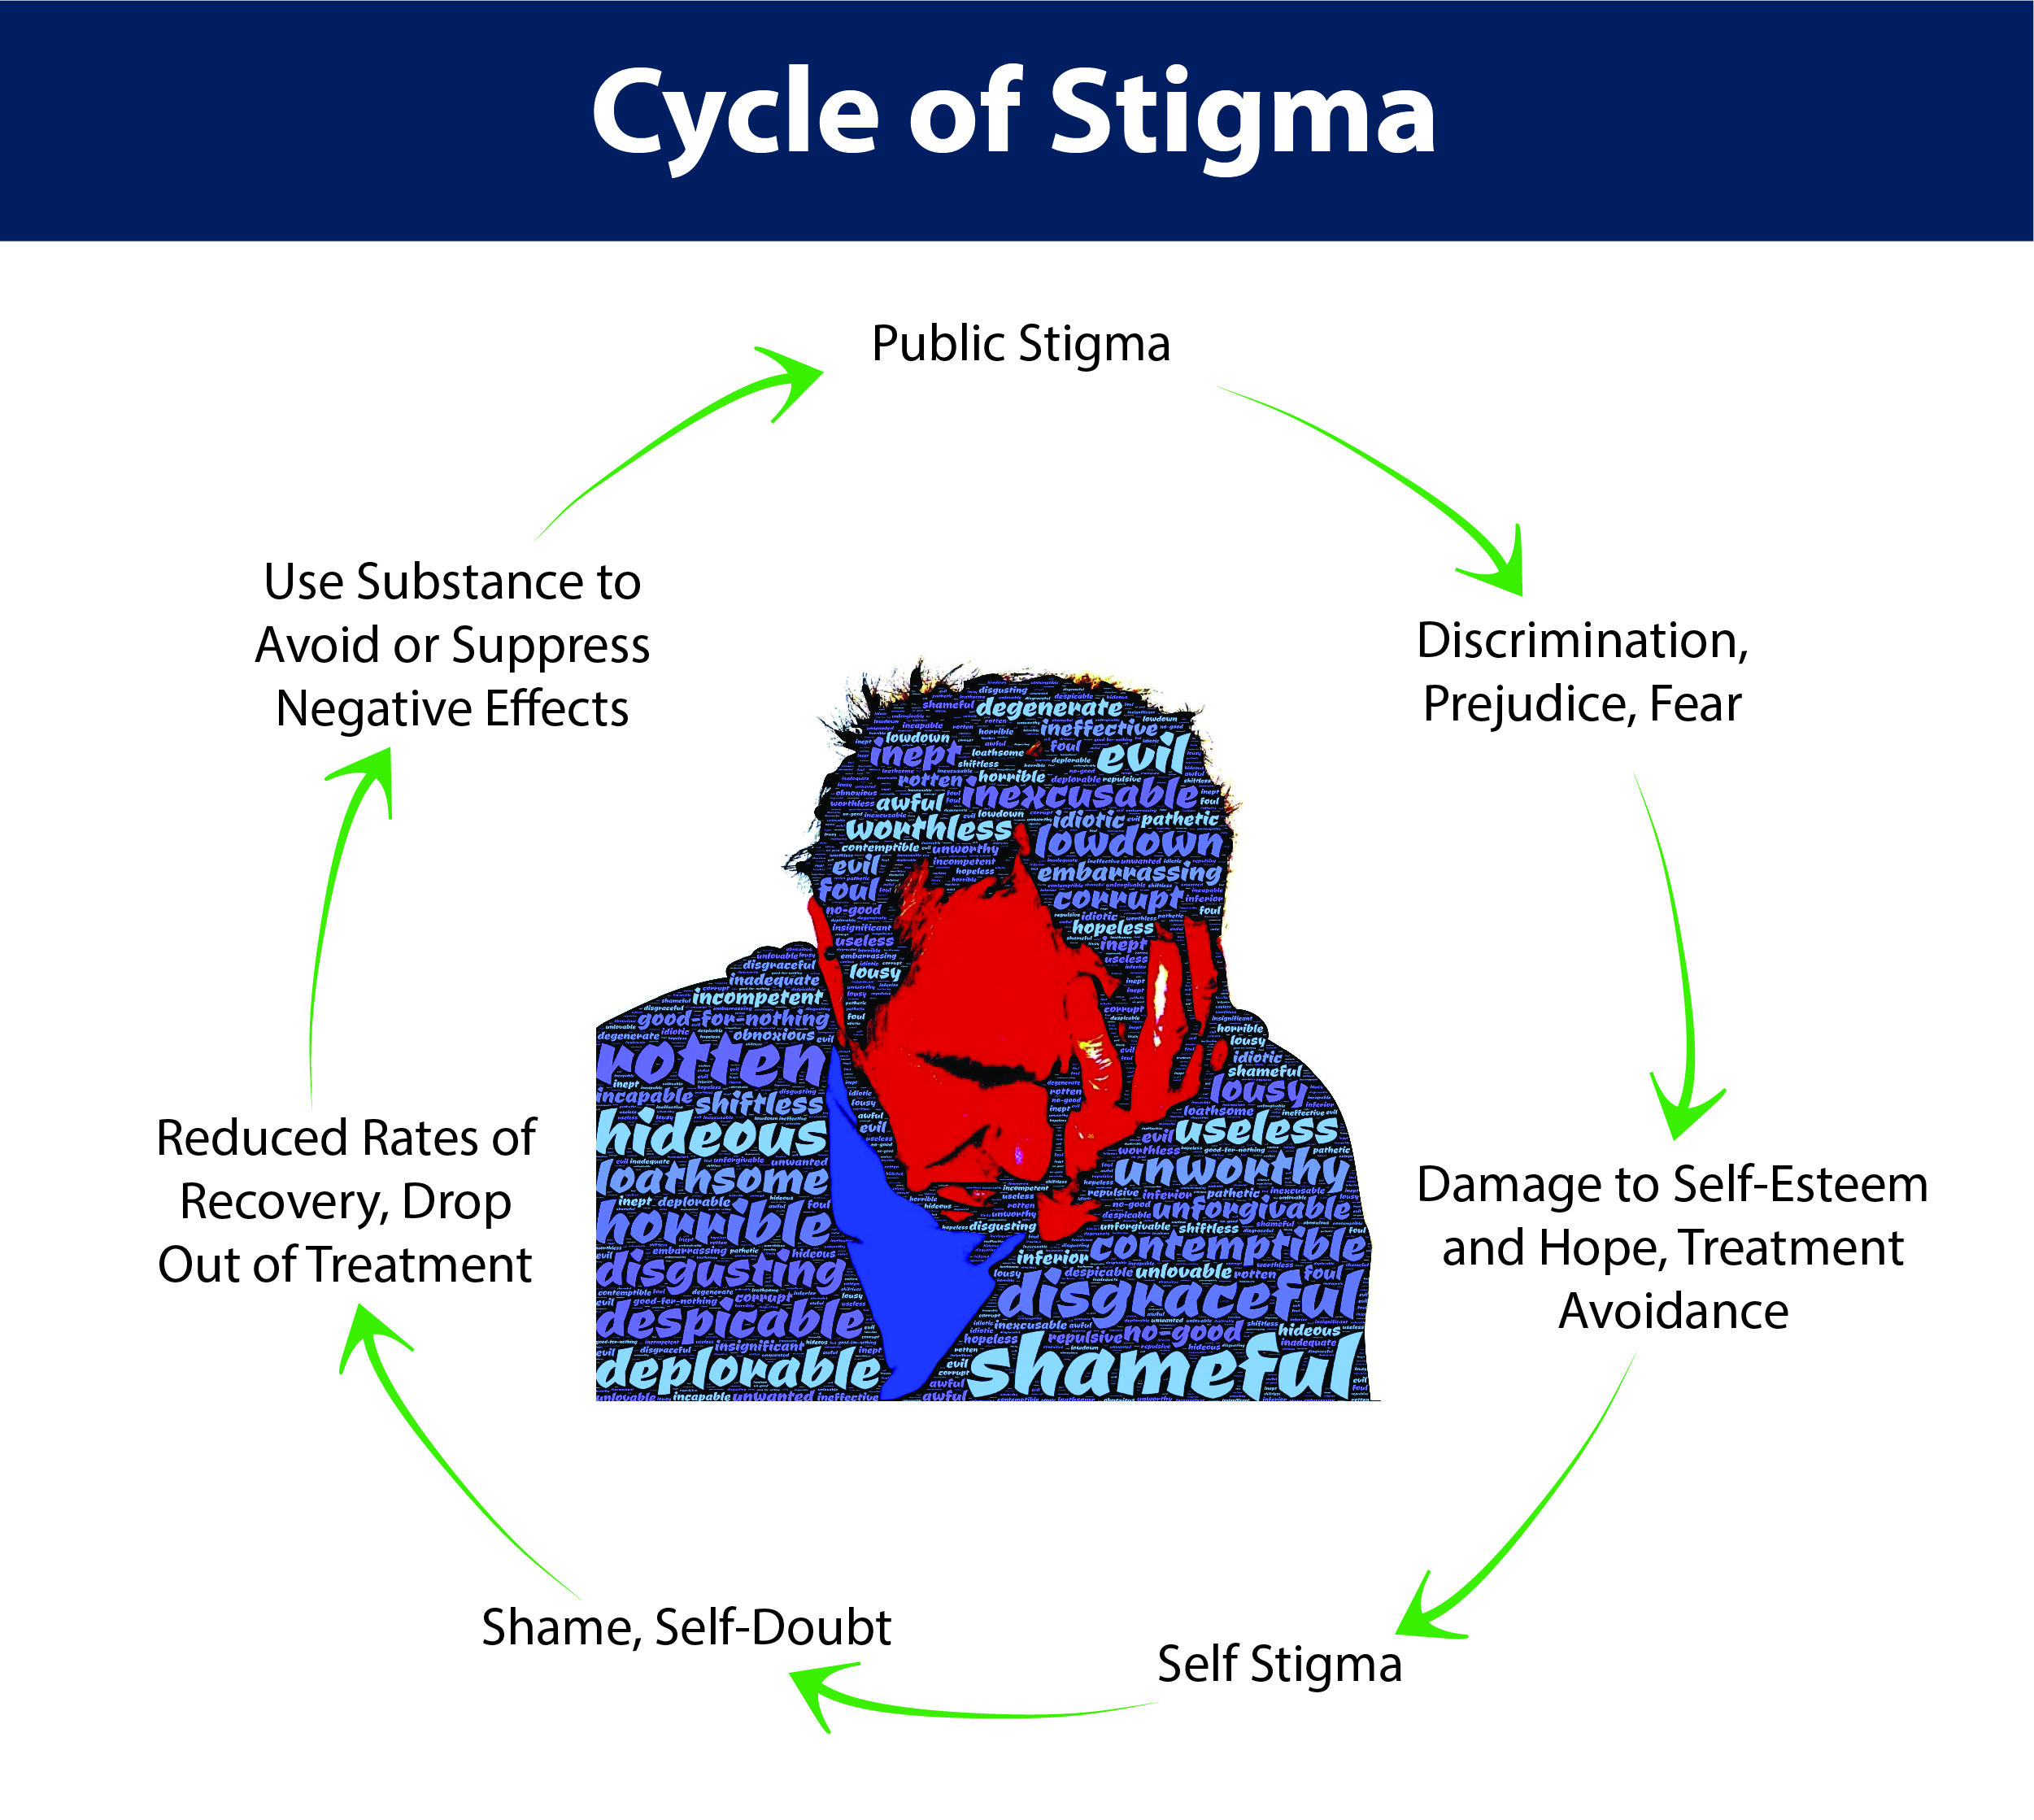 Cycle of Stigma graphic